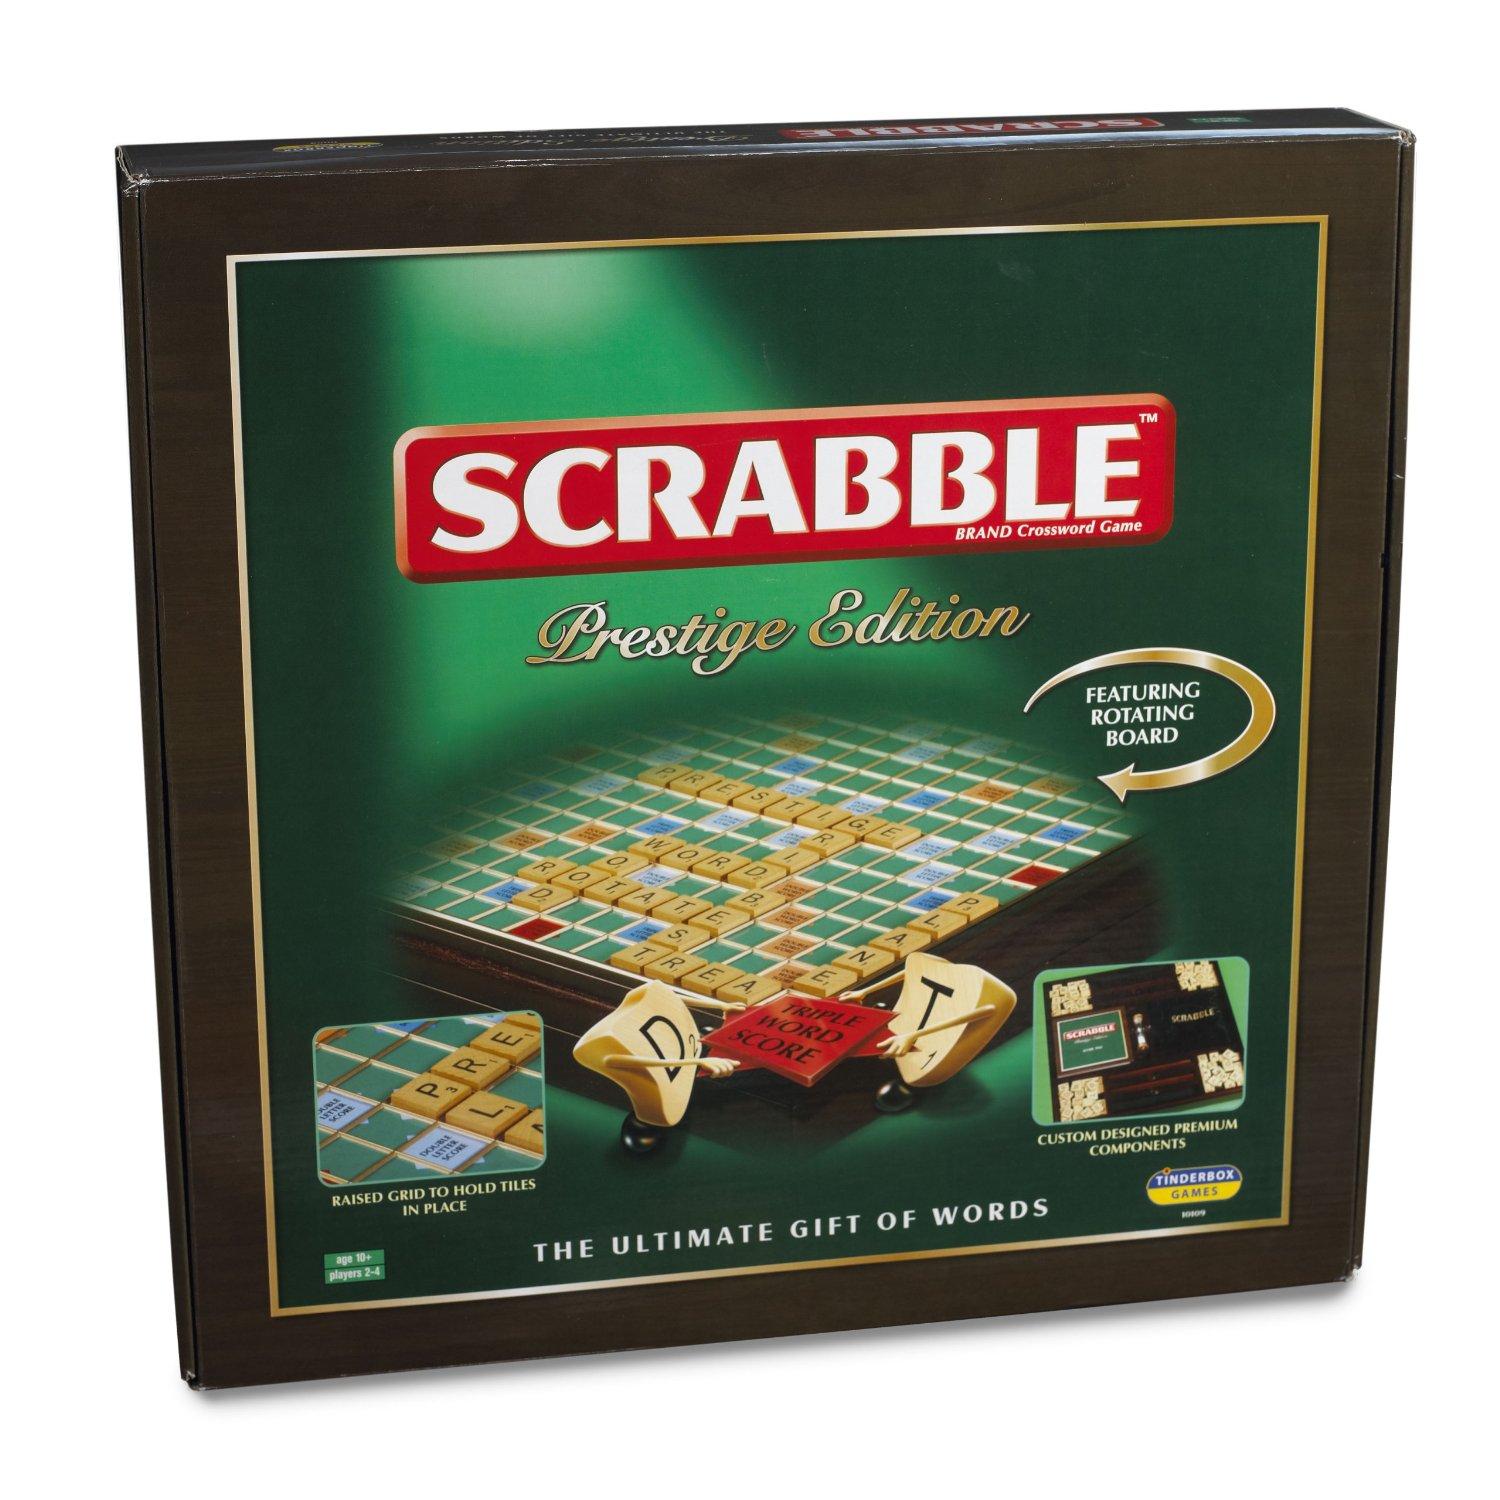 Scrabble board. Rotating Board Скрабл. Scrabble игра. Scrabble Board game. Scrabble доска.